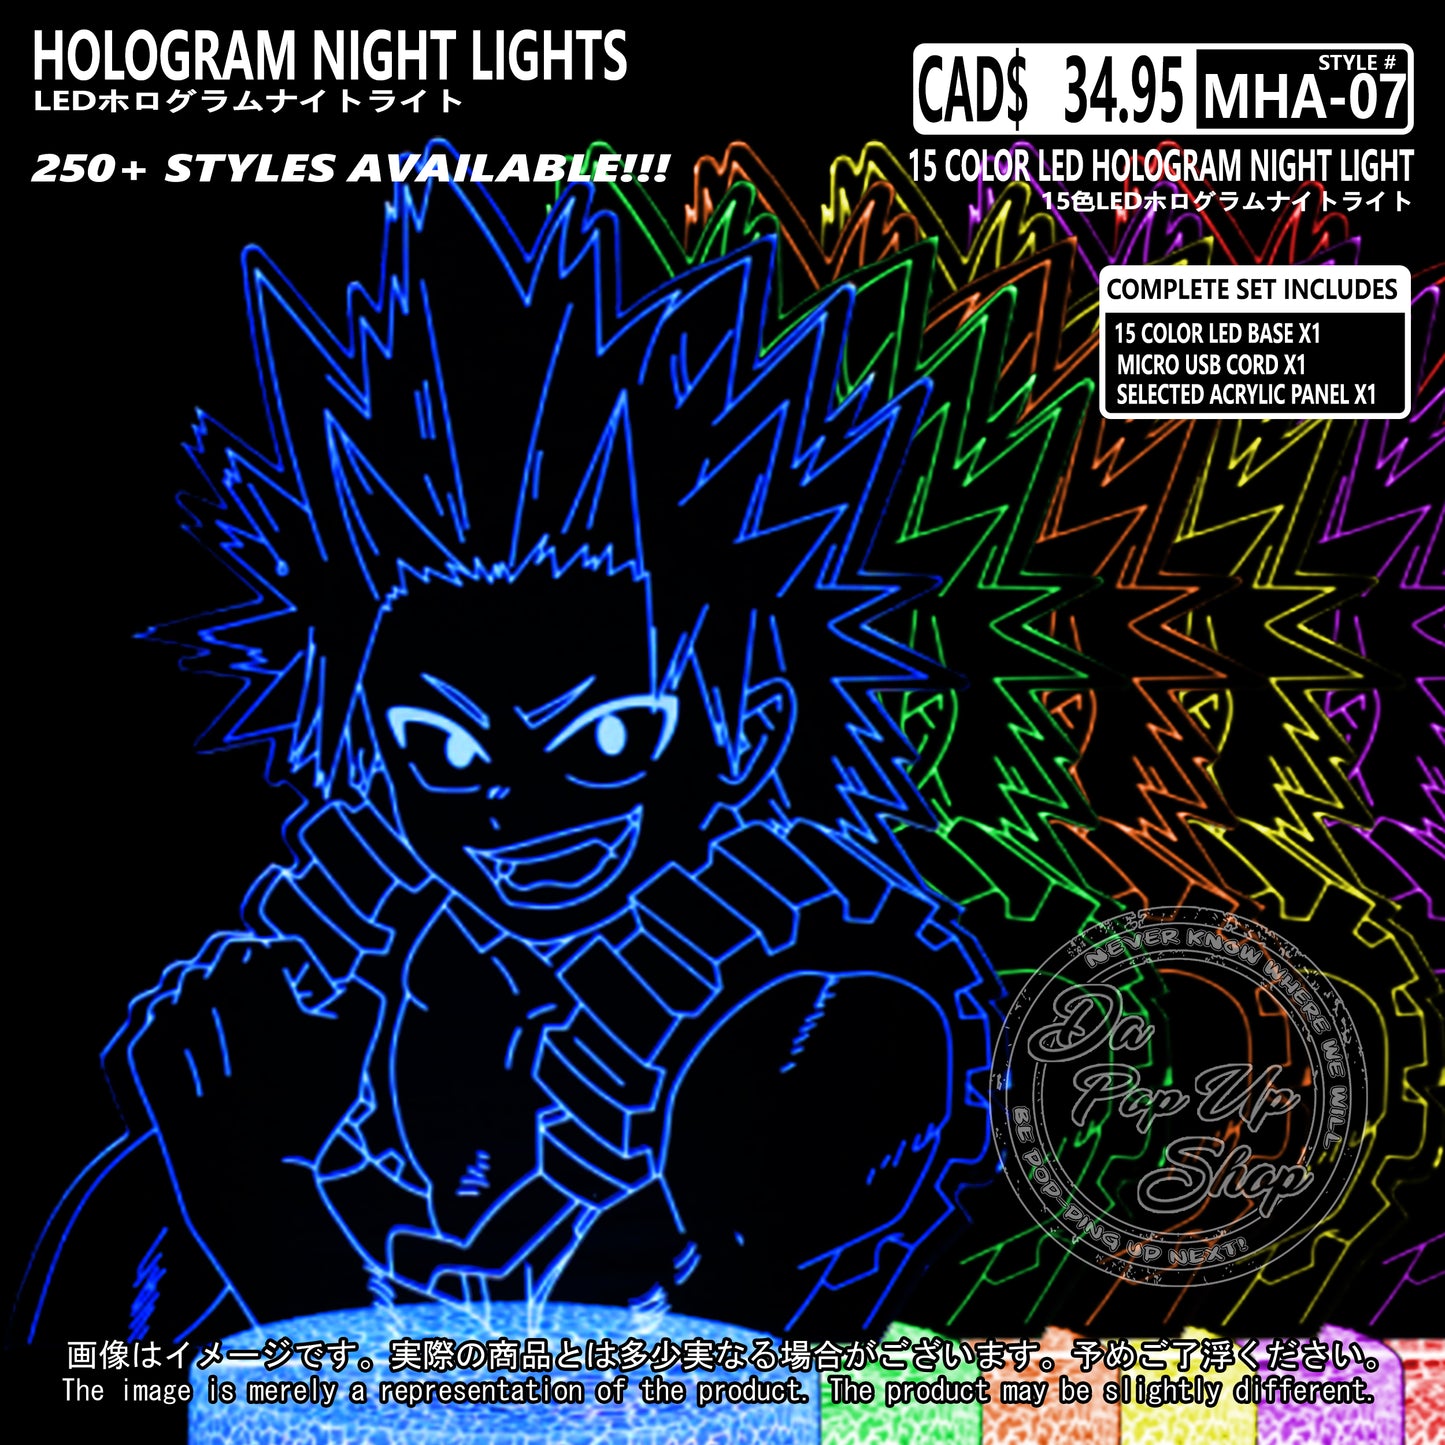 (MHA-07) My Hero Academia Hologram LED Night Light